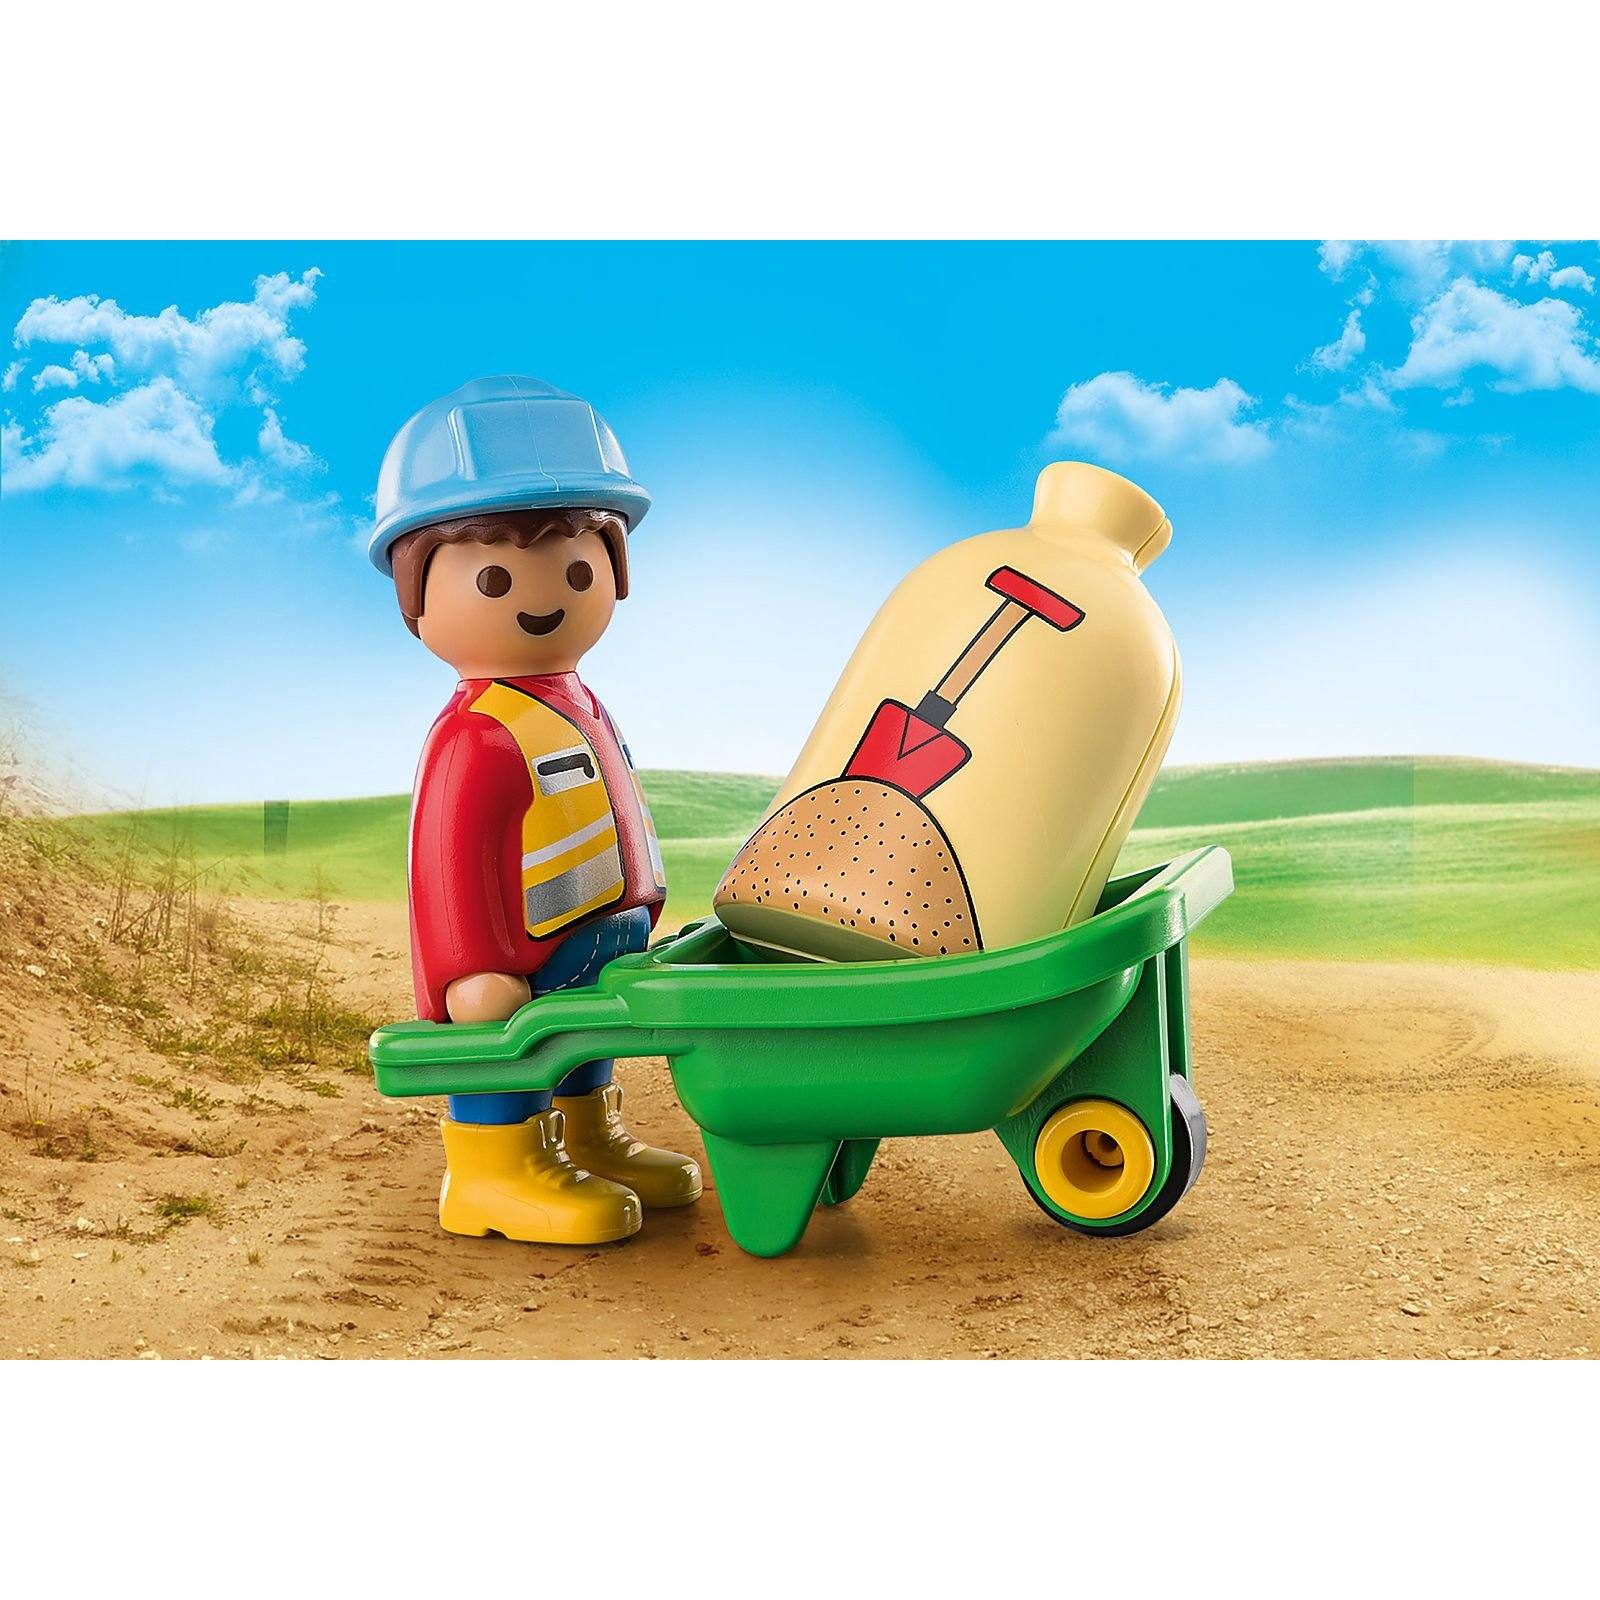 Playmobil 1.2.3. Construction Worker with Wheelbarrow